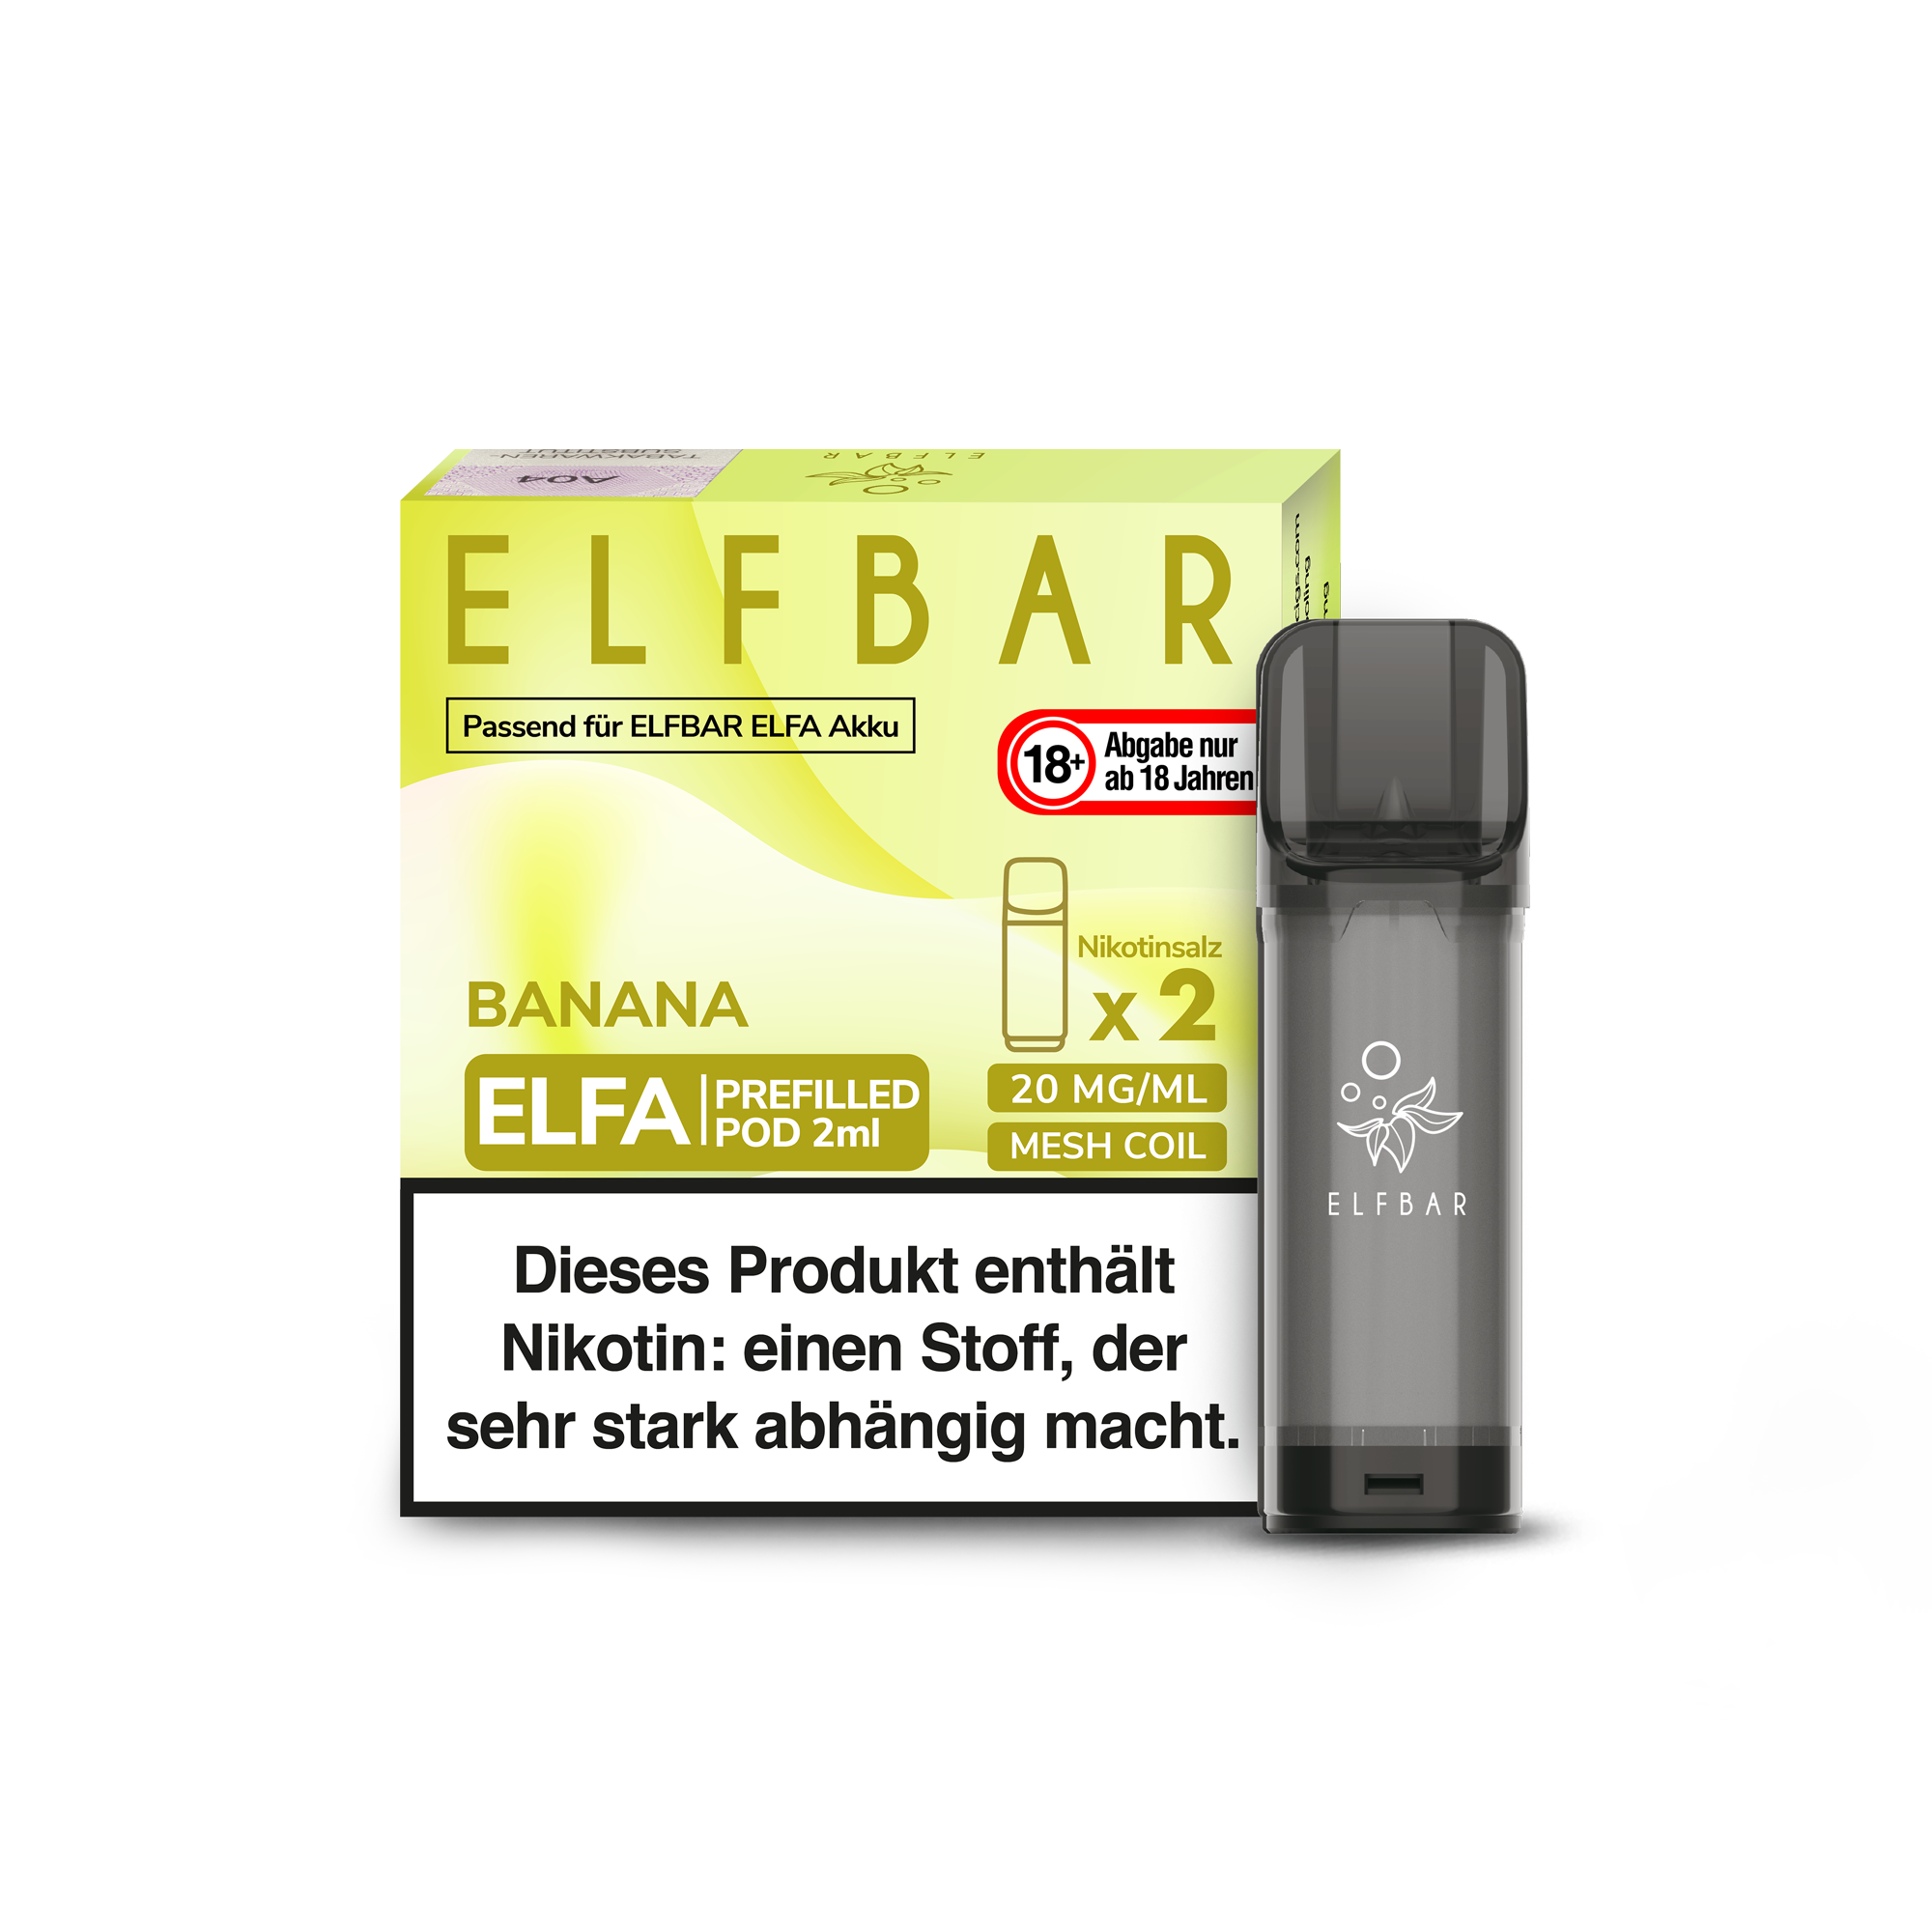 Elfbar ELFA pre-filled POD's 2x2ml Banana kaufen